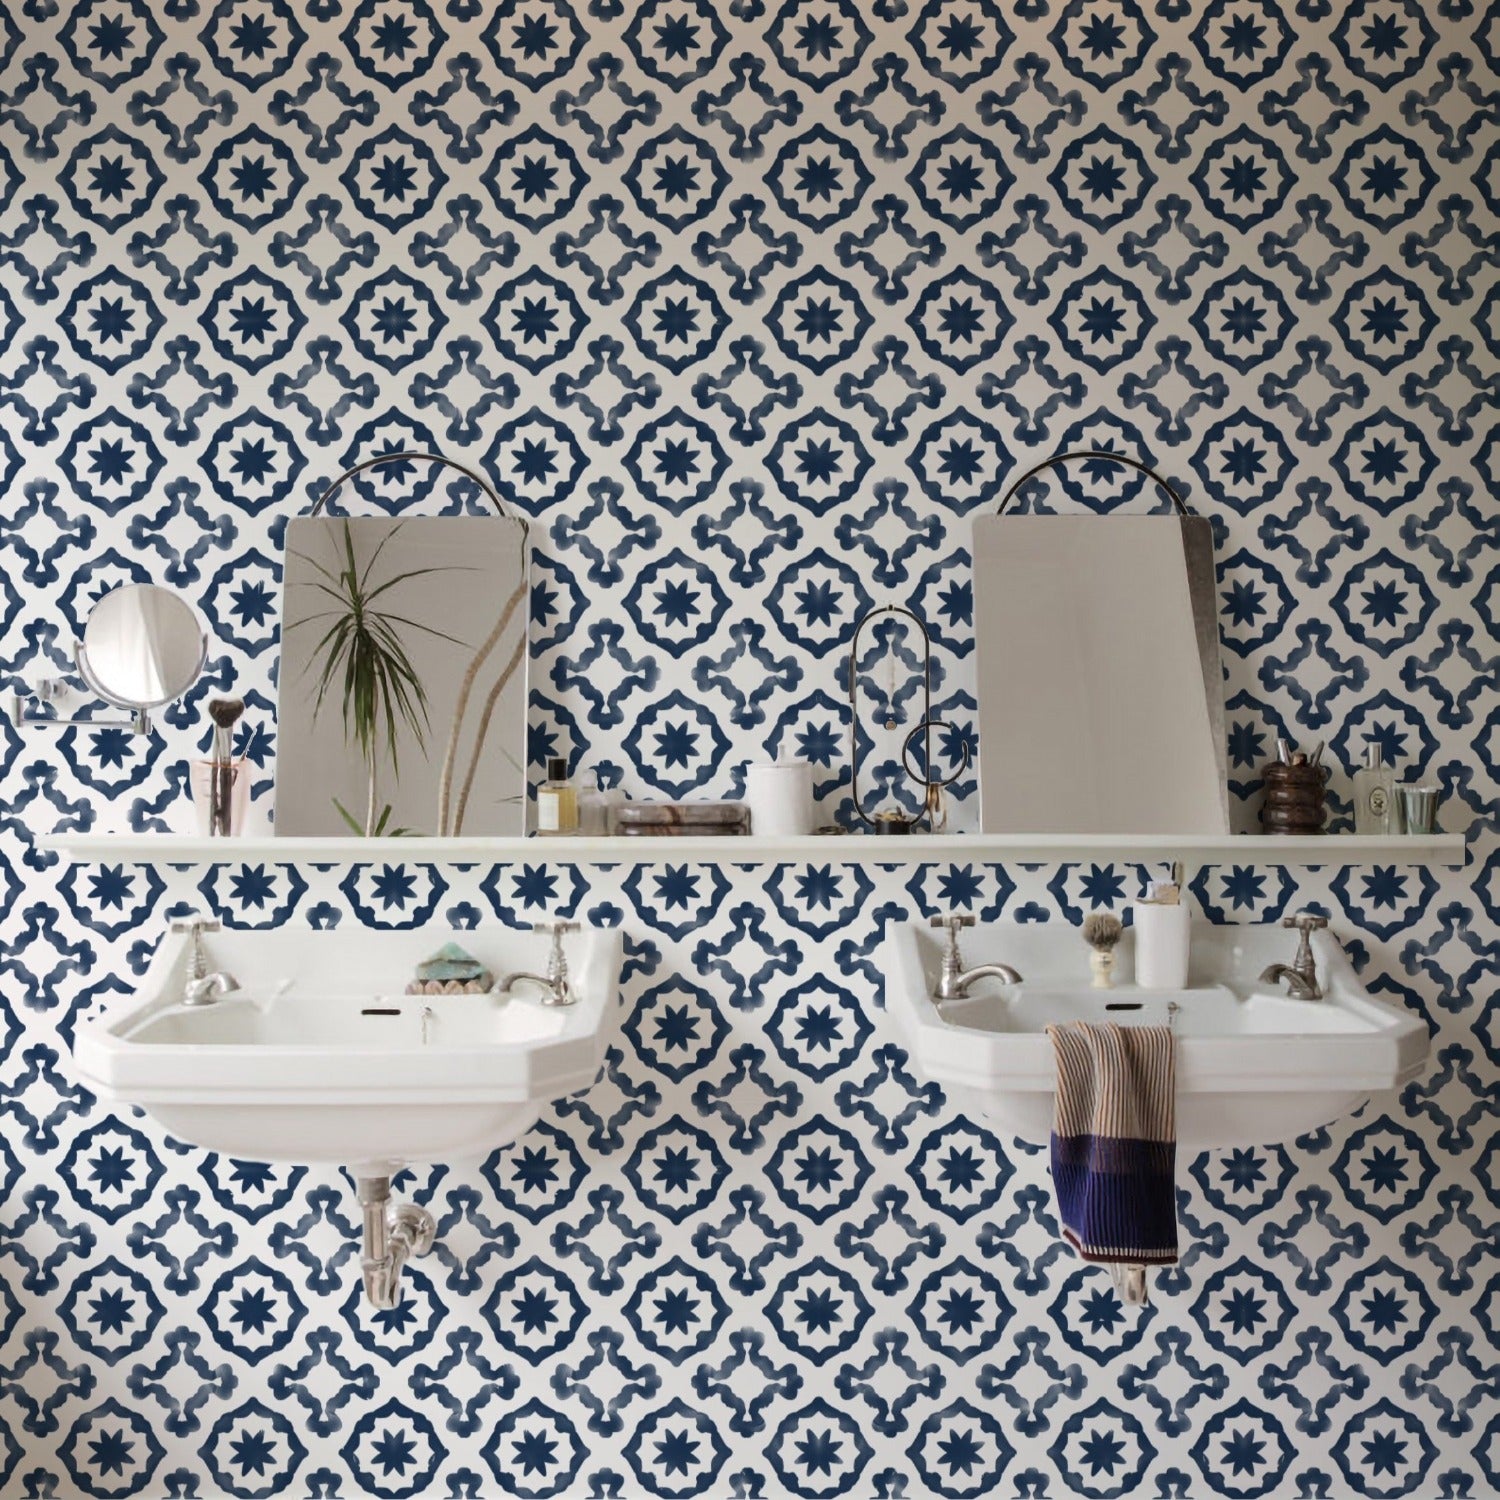 wallpaper, peel and stick wallpaper, Home decor, geometric wallpaper, bathroom wallpaper, navy blue wallpaper,